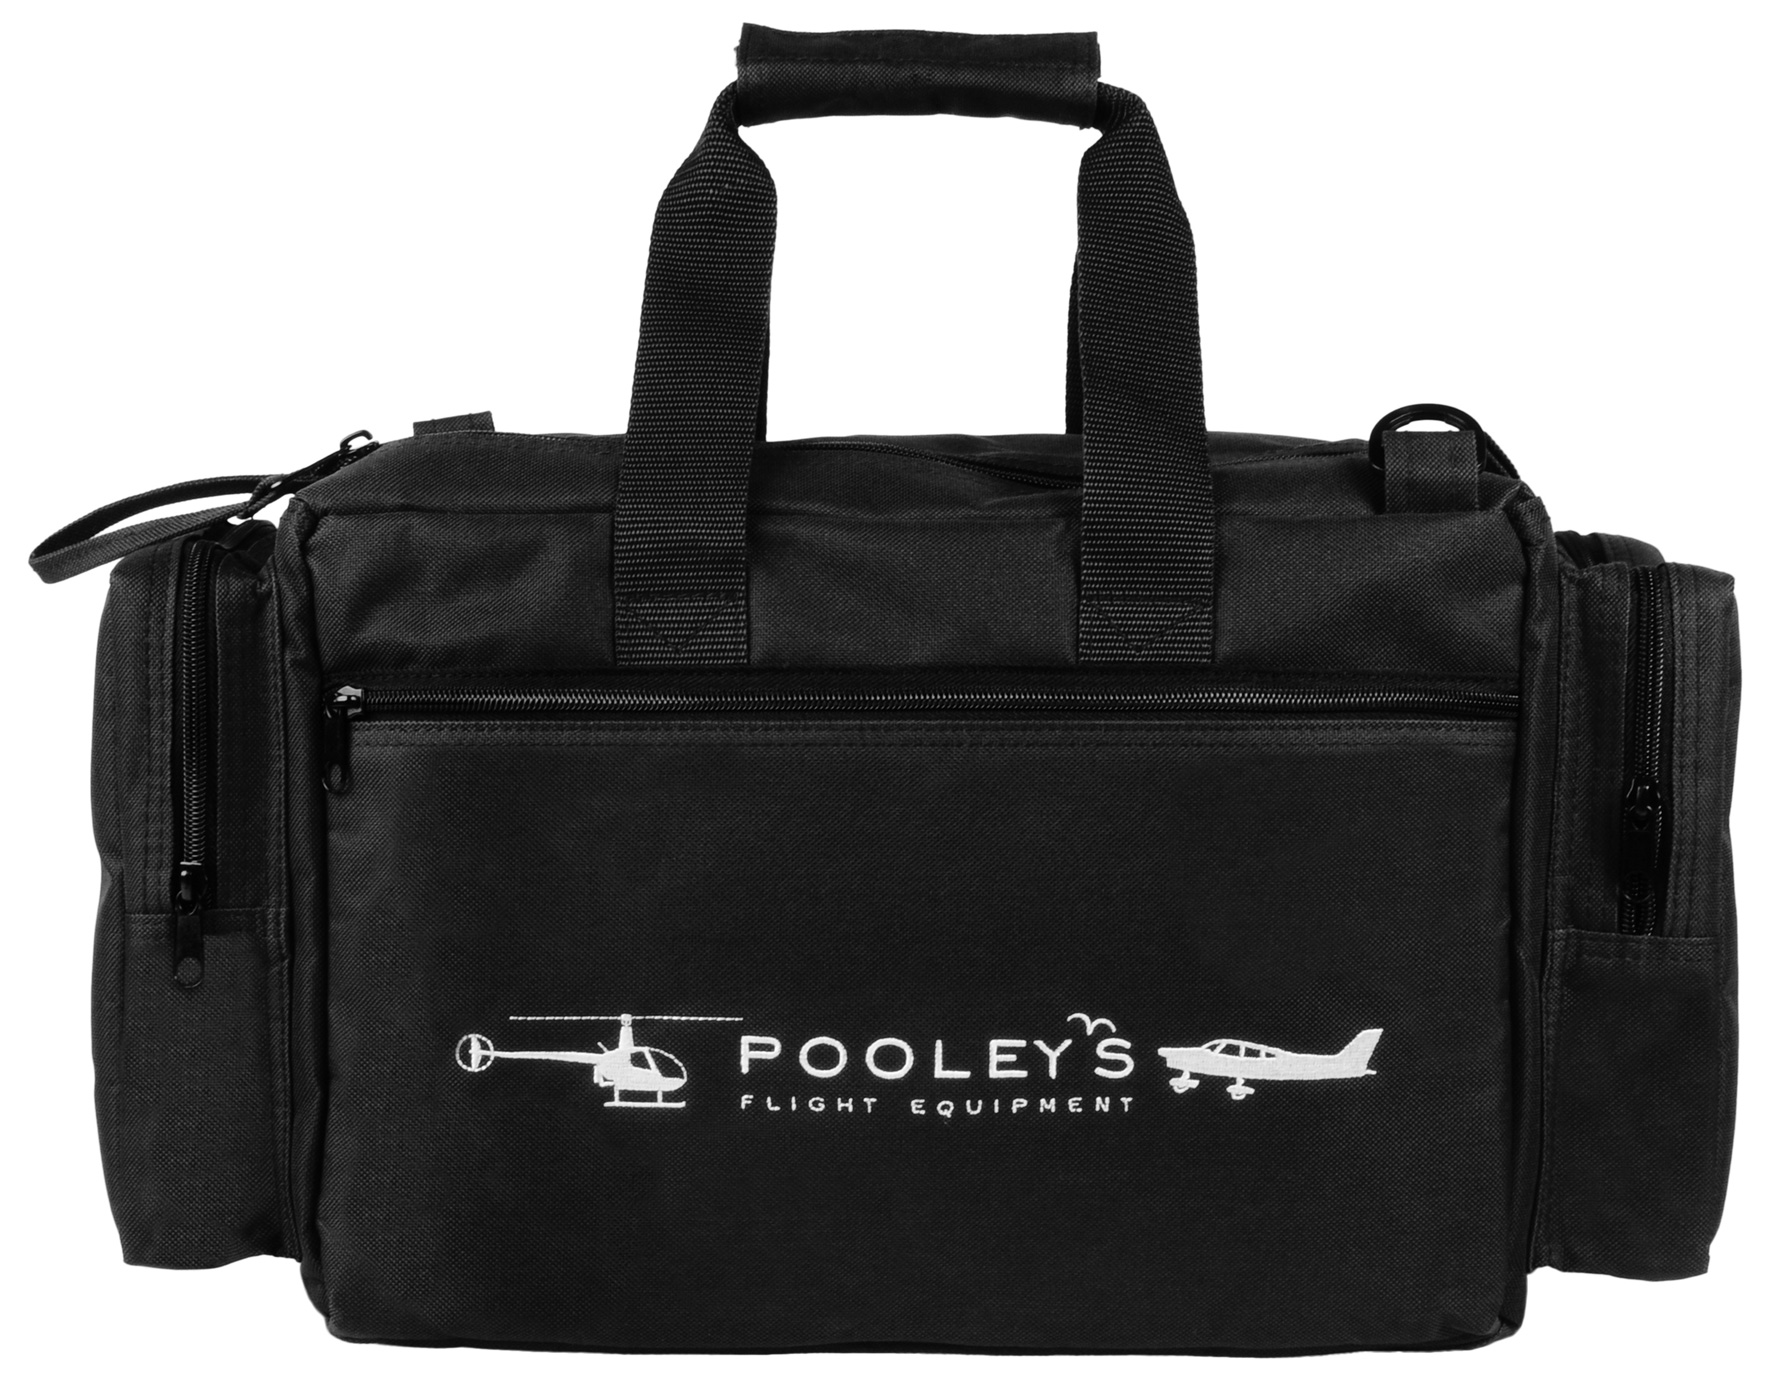 FC-8 Pooleys Pilot’s Flight Bag (Navy Blue or Black)